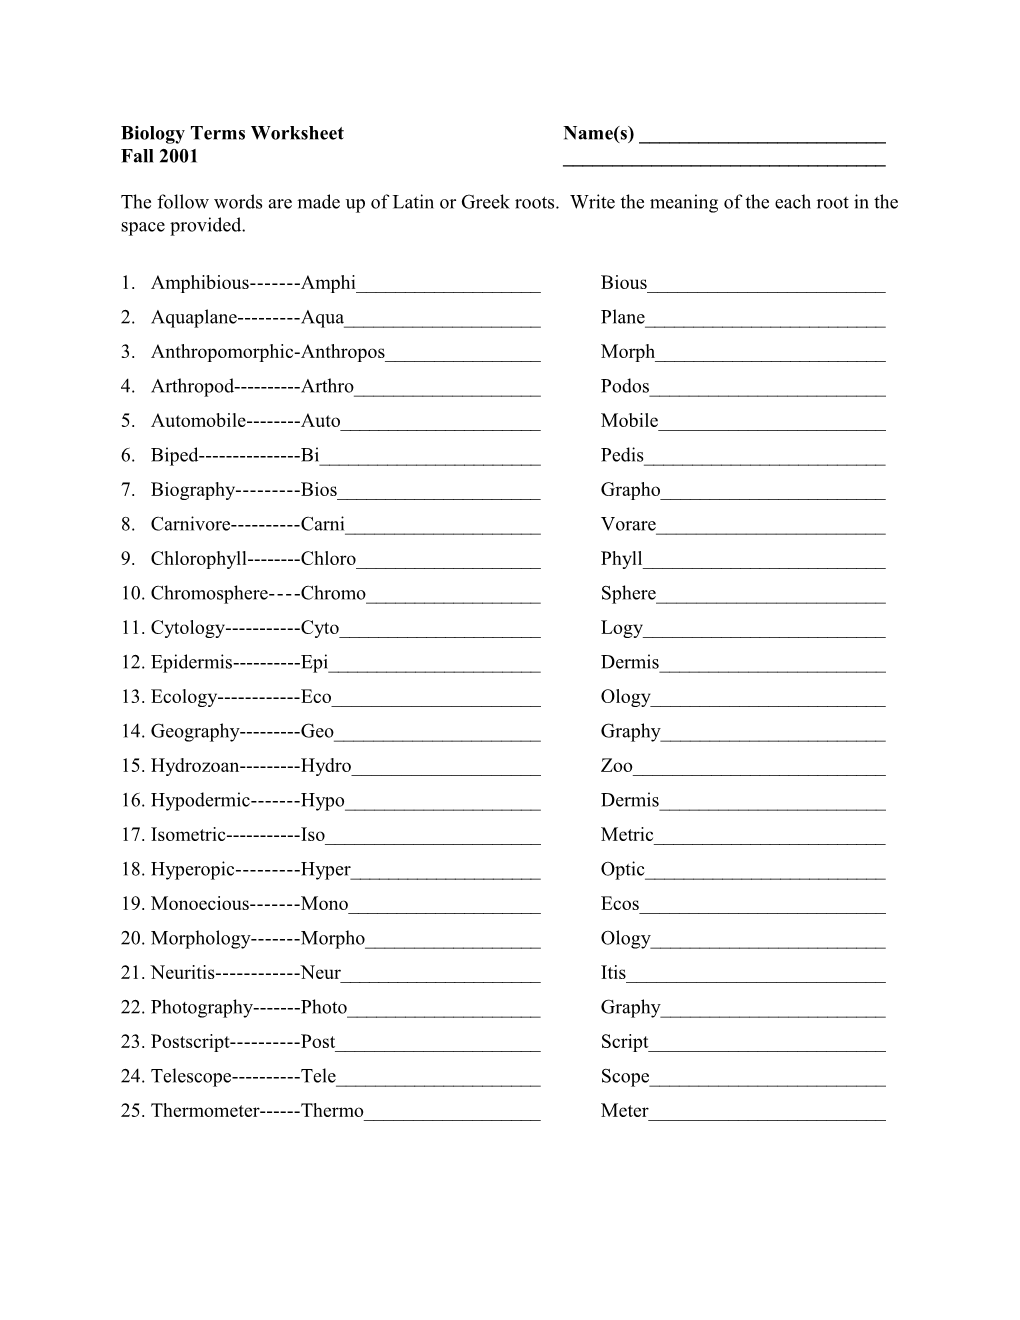 Biology Terms Worksheet Name(S)